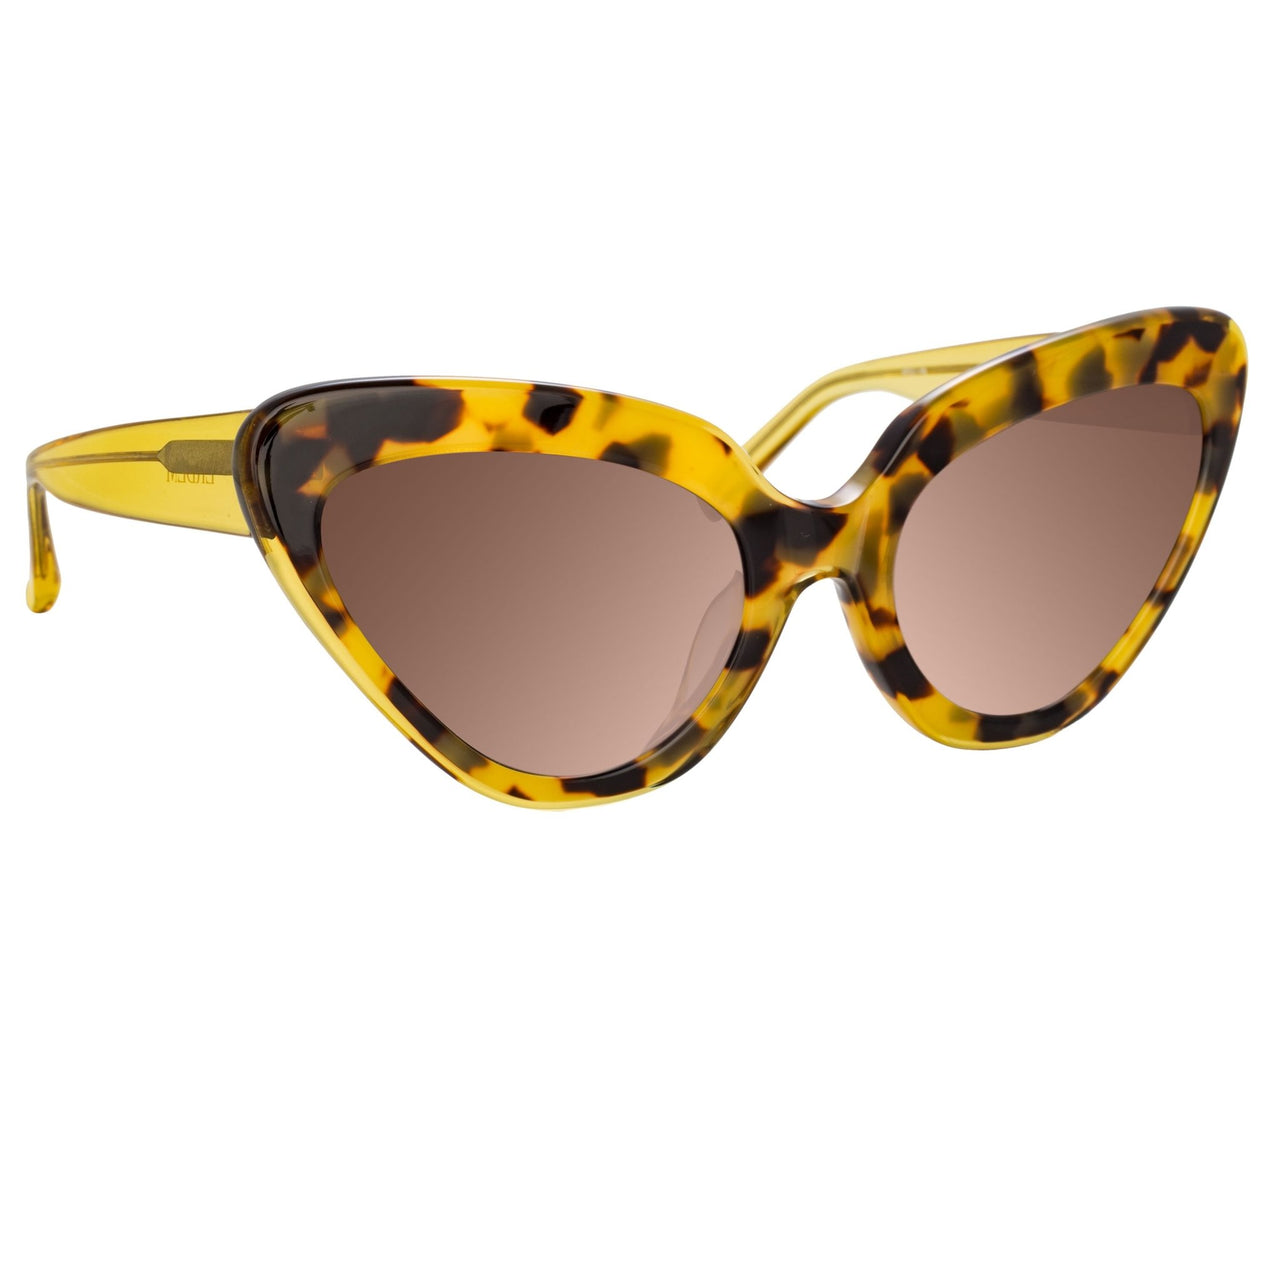 Erdem Sunglasses Cat Eye Beige and Grey – Watches & Crystals